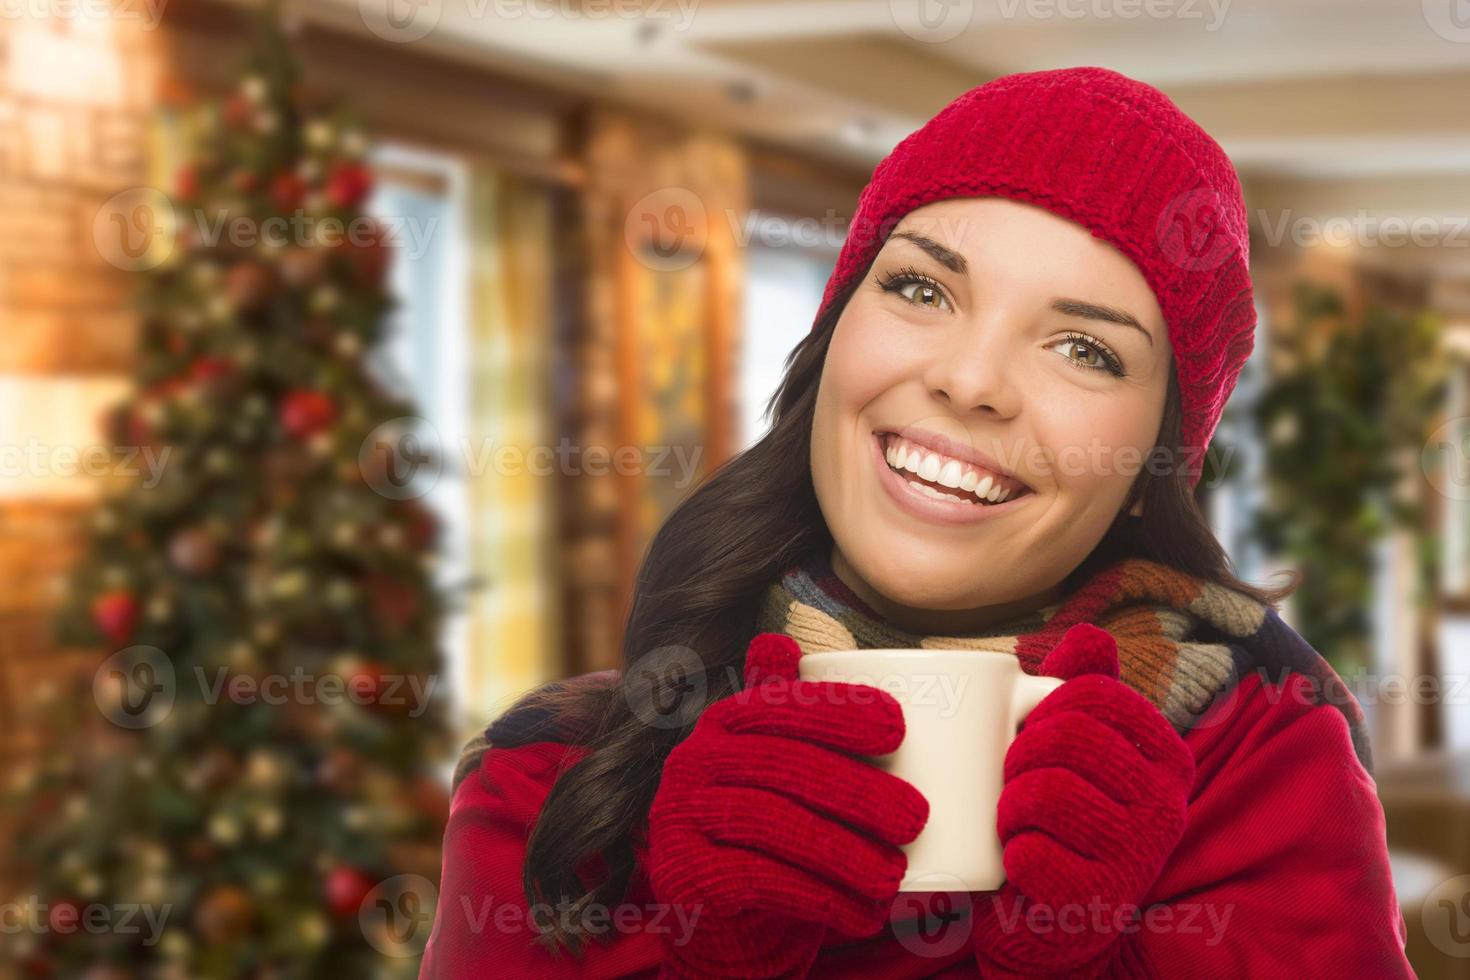 gemengd ras vrouw vervelend hoed en handschoenen in Kerstmis instelling foto